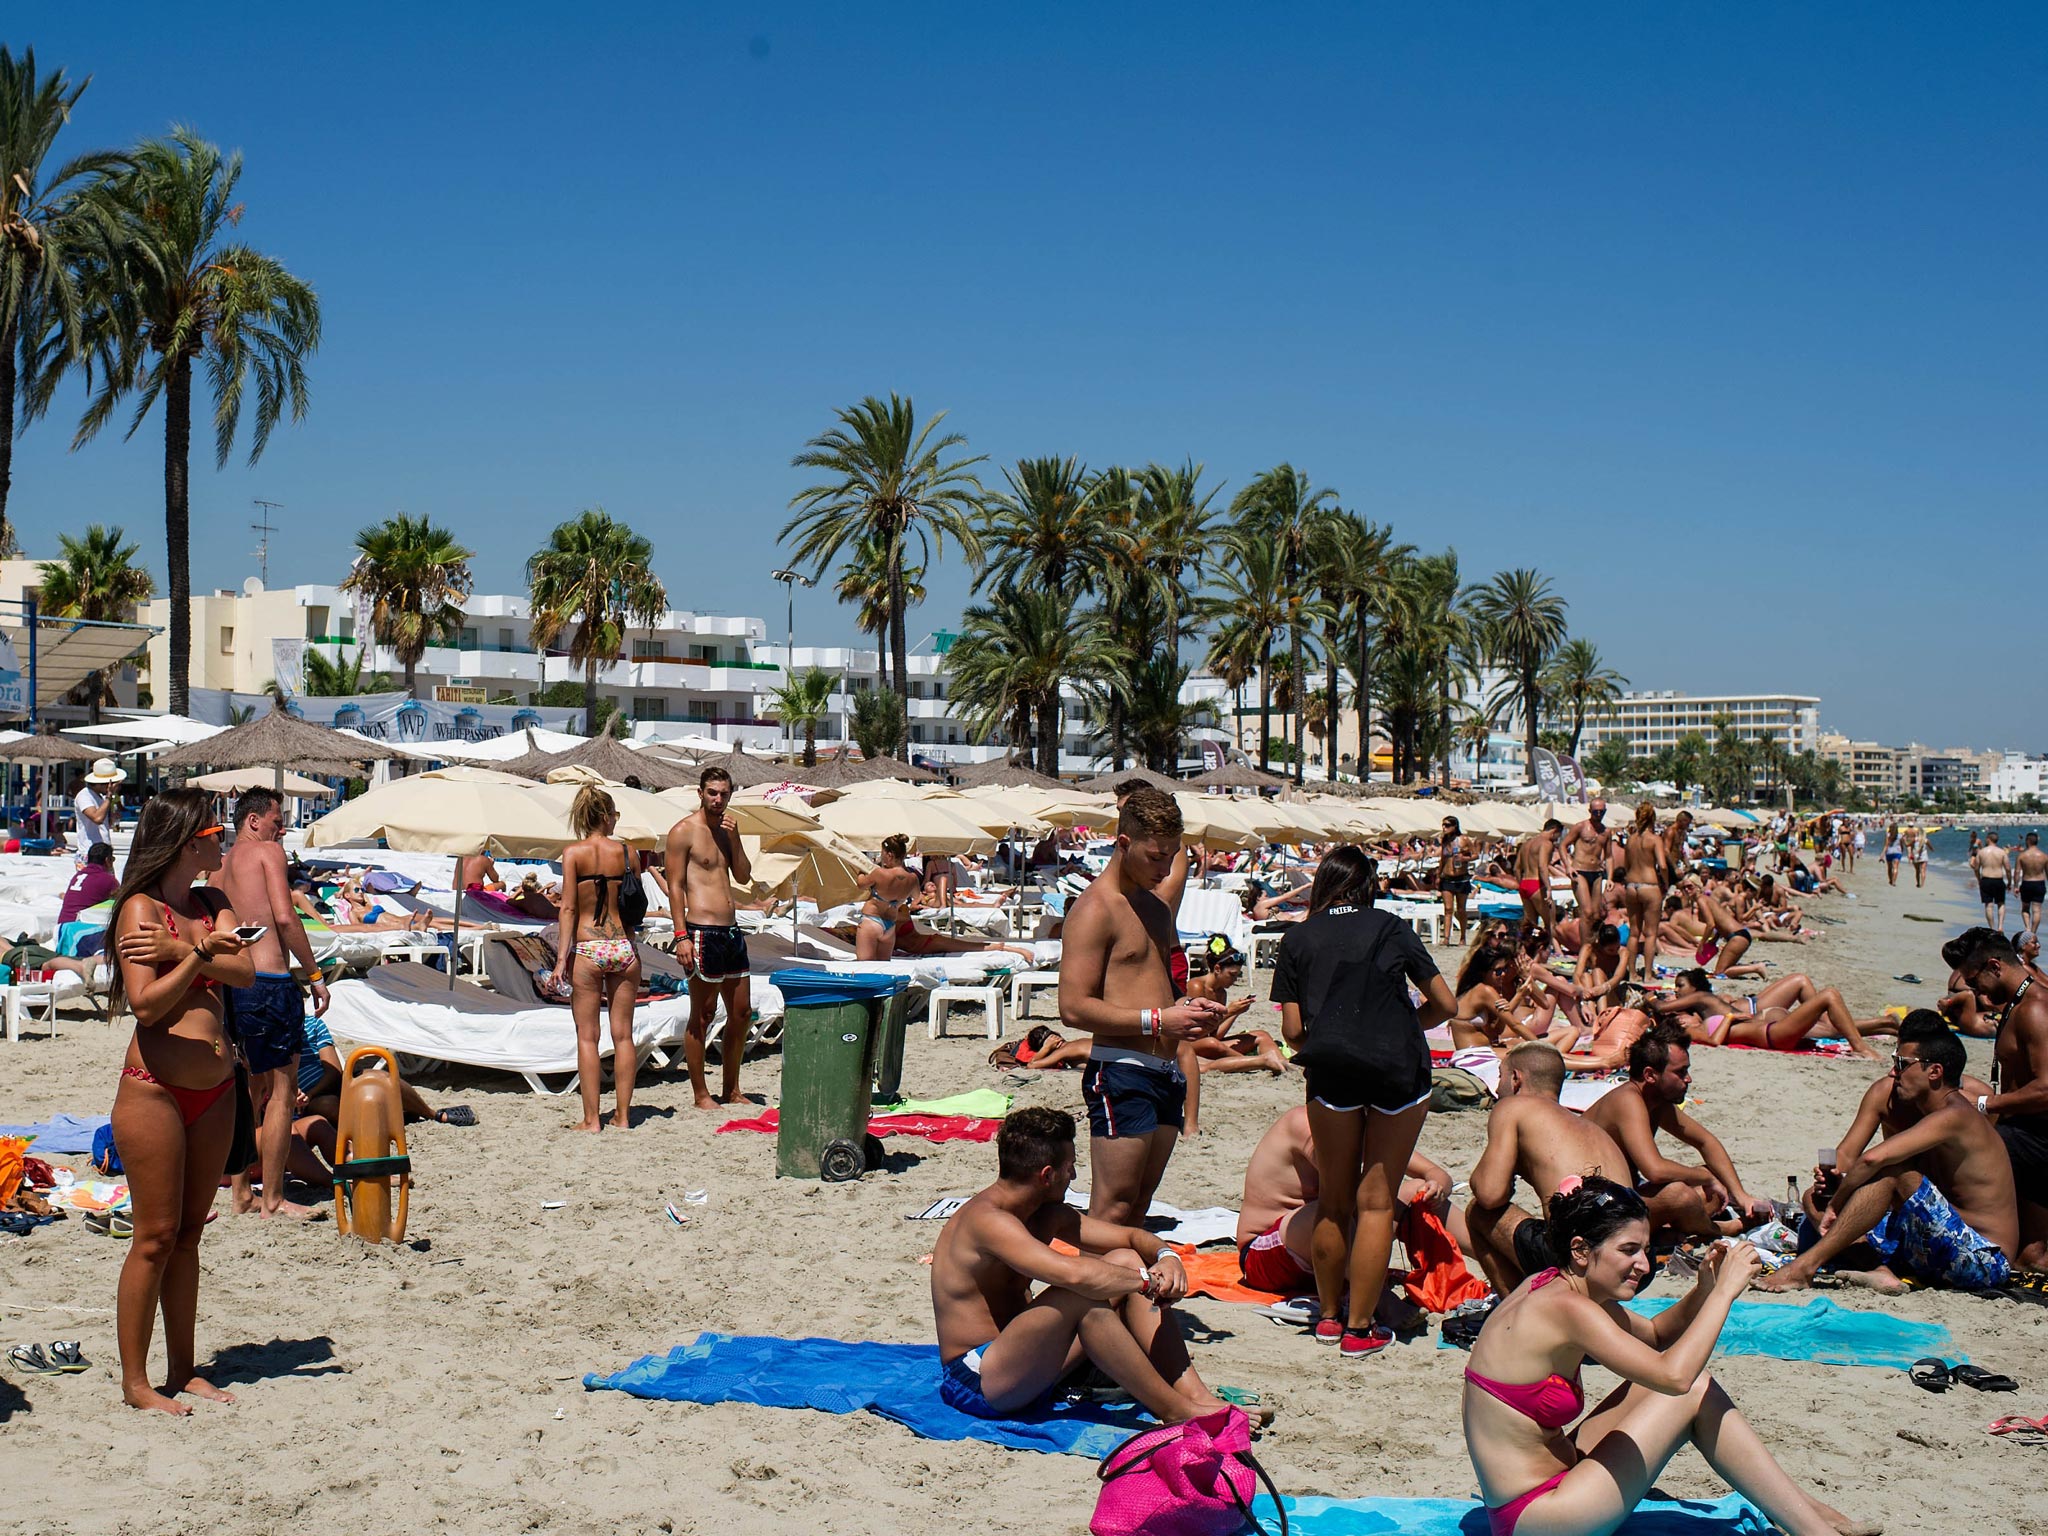 People sunbathe at Platja d'en Bossa beach in Ibiza, Spain